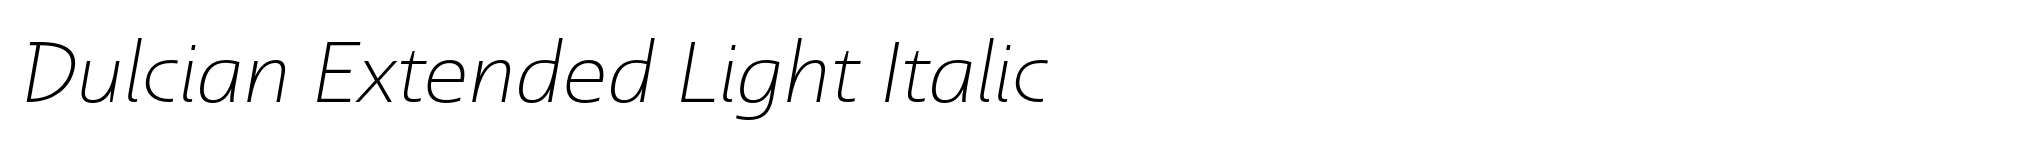 Dulcian Extended Light Italic image